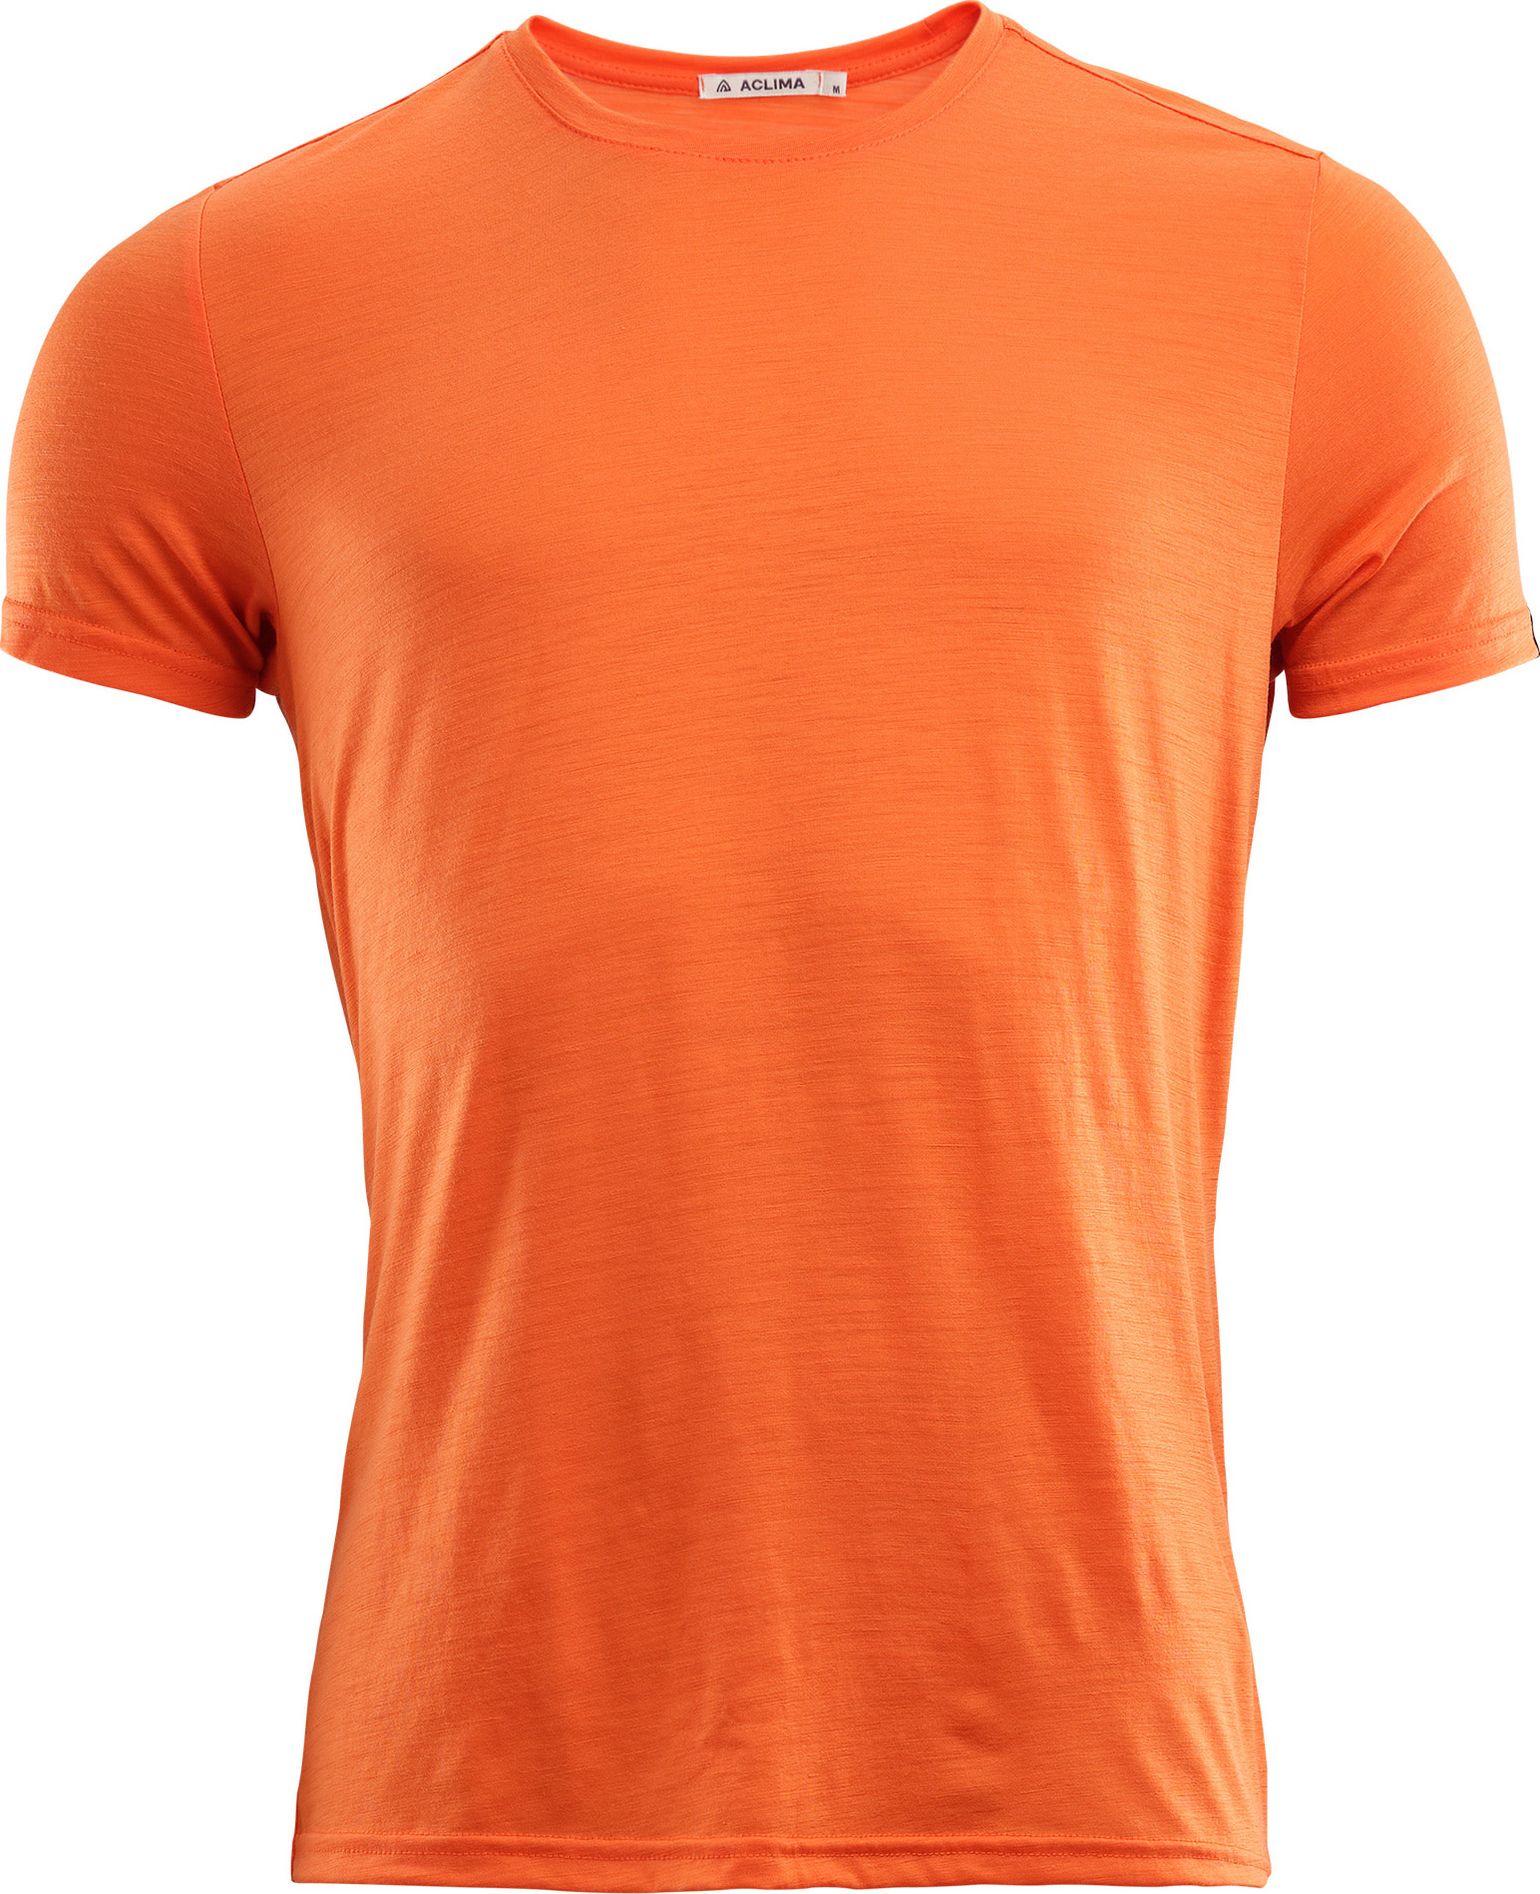 Men's LightWool T-shirt Round Neck Orange Tiger